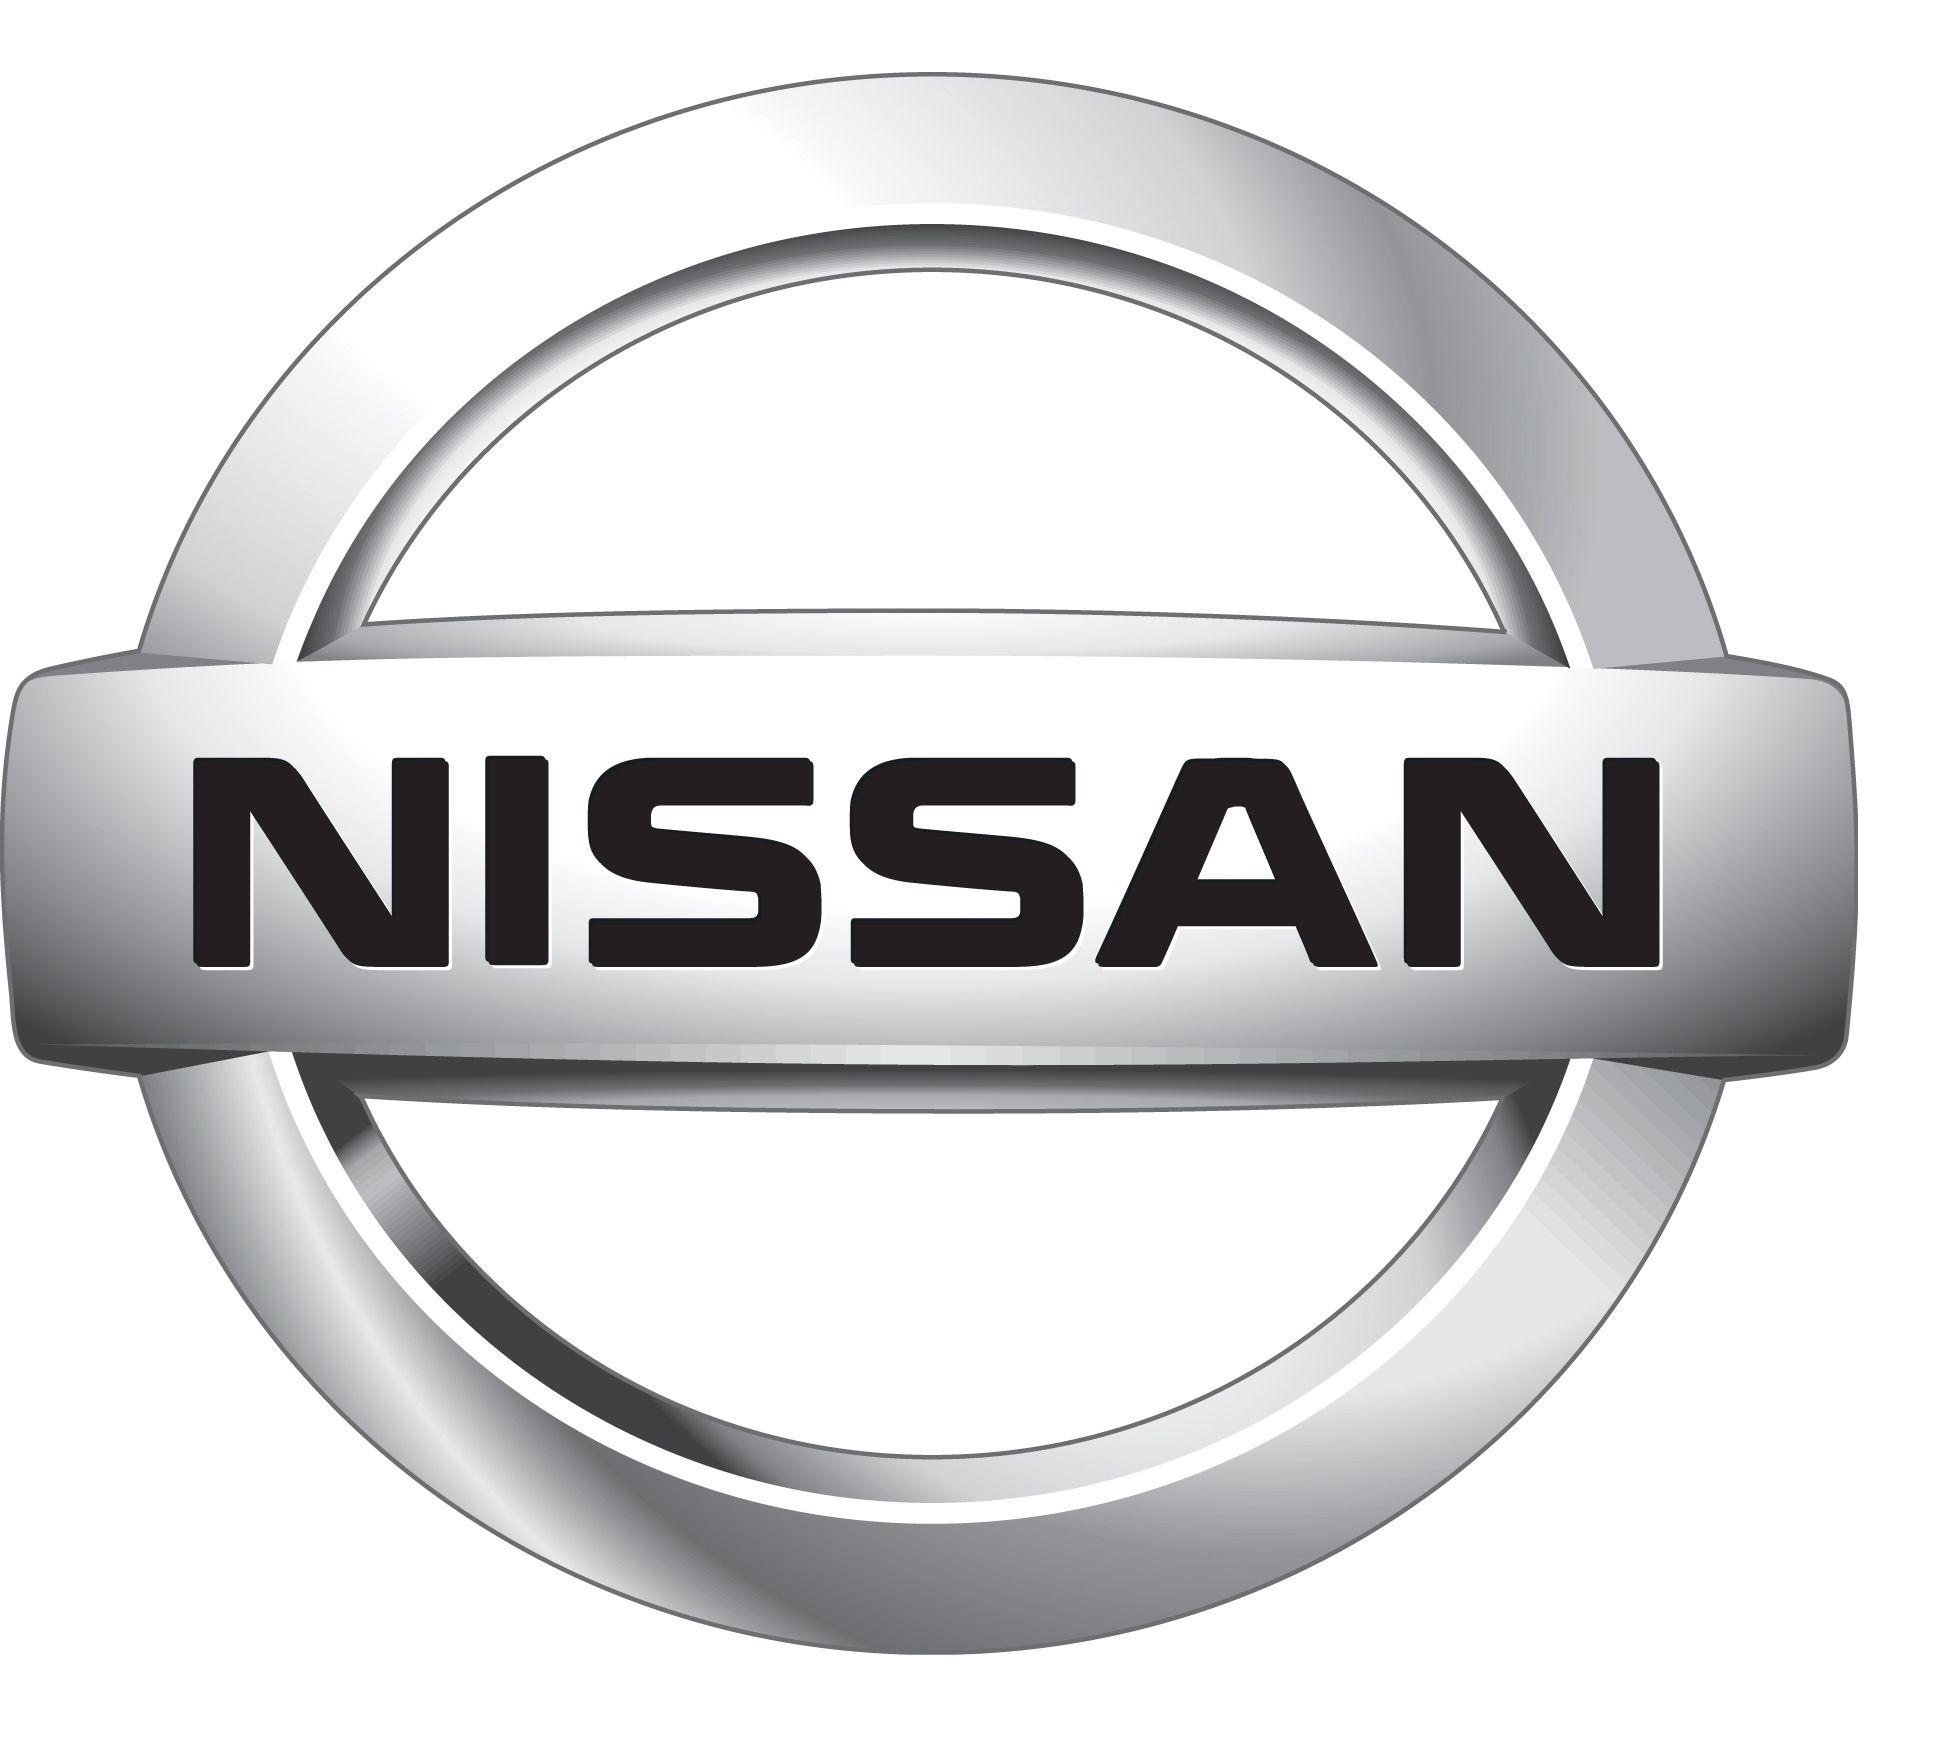 Vehicle Logo - Nissan Logo, Nissan Car Symbol Meaning and History | Car Brand Names.com